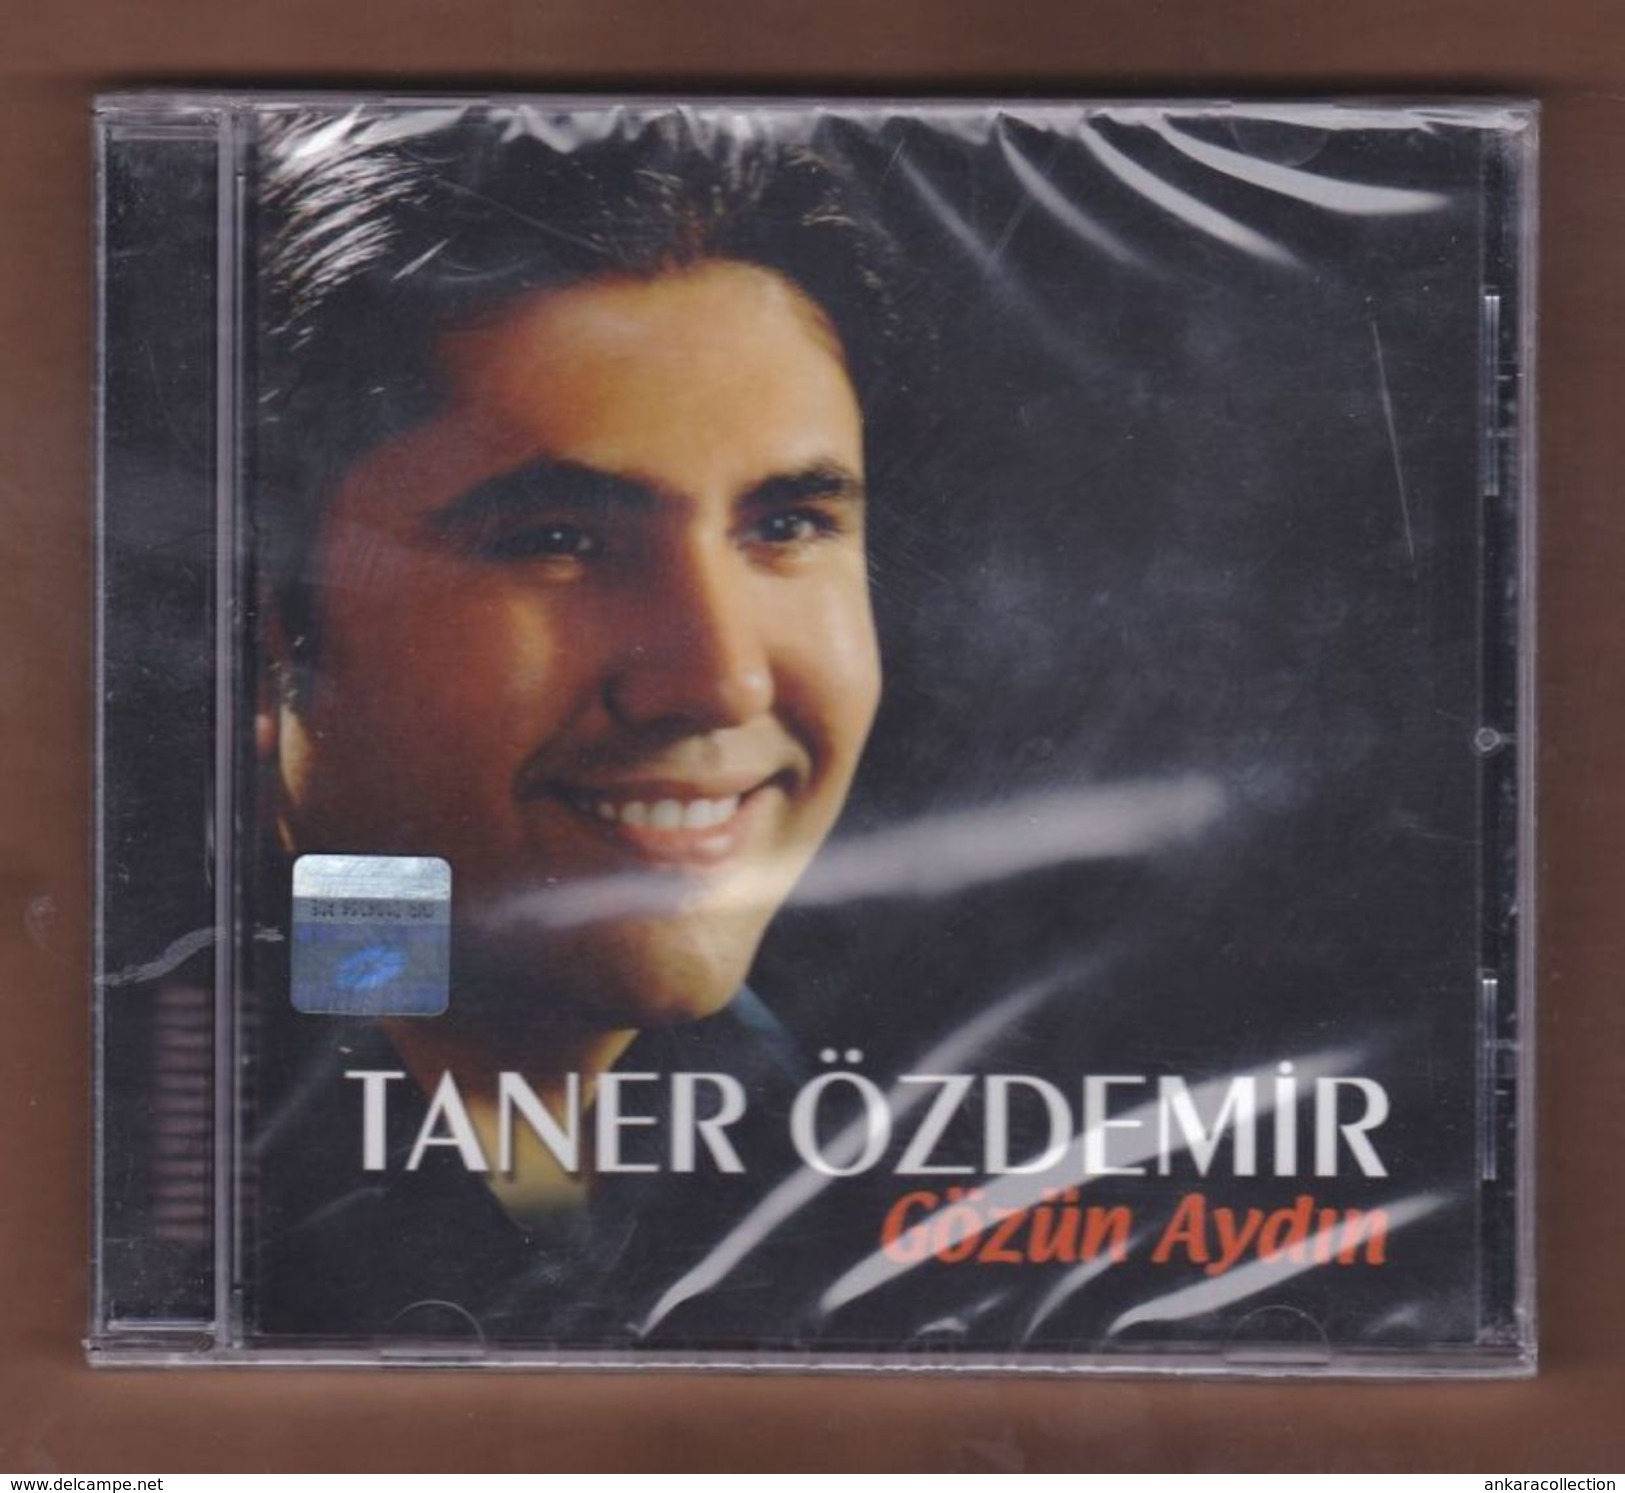 AC -  Taner özdemir Gözün Aydın BRAND NEW TURKISH MUSIC CD - World Music